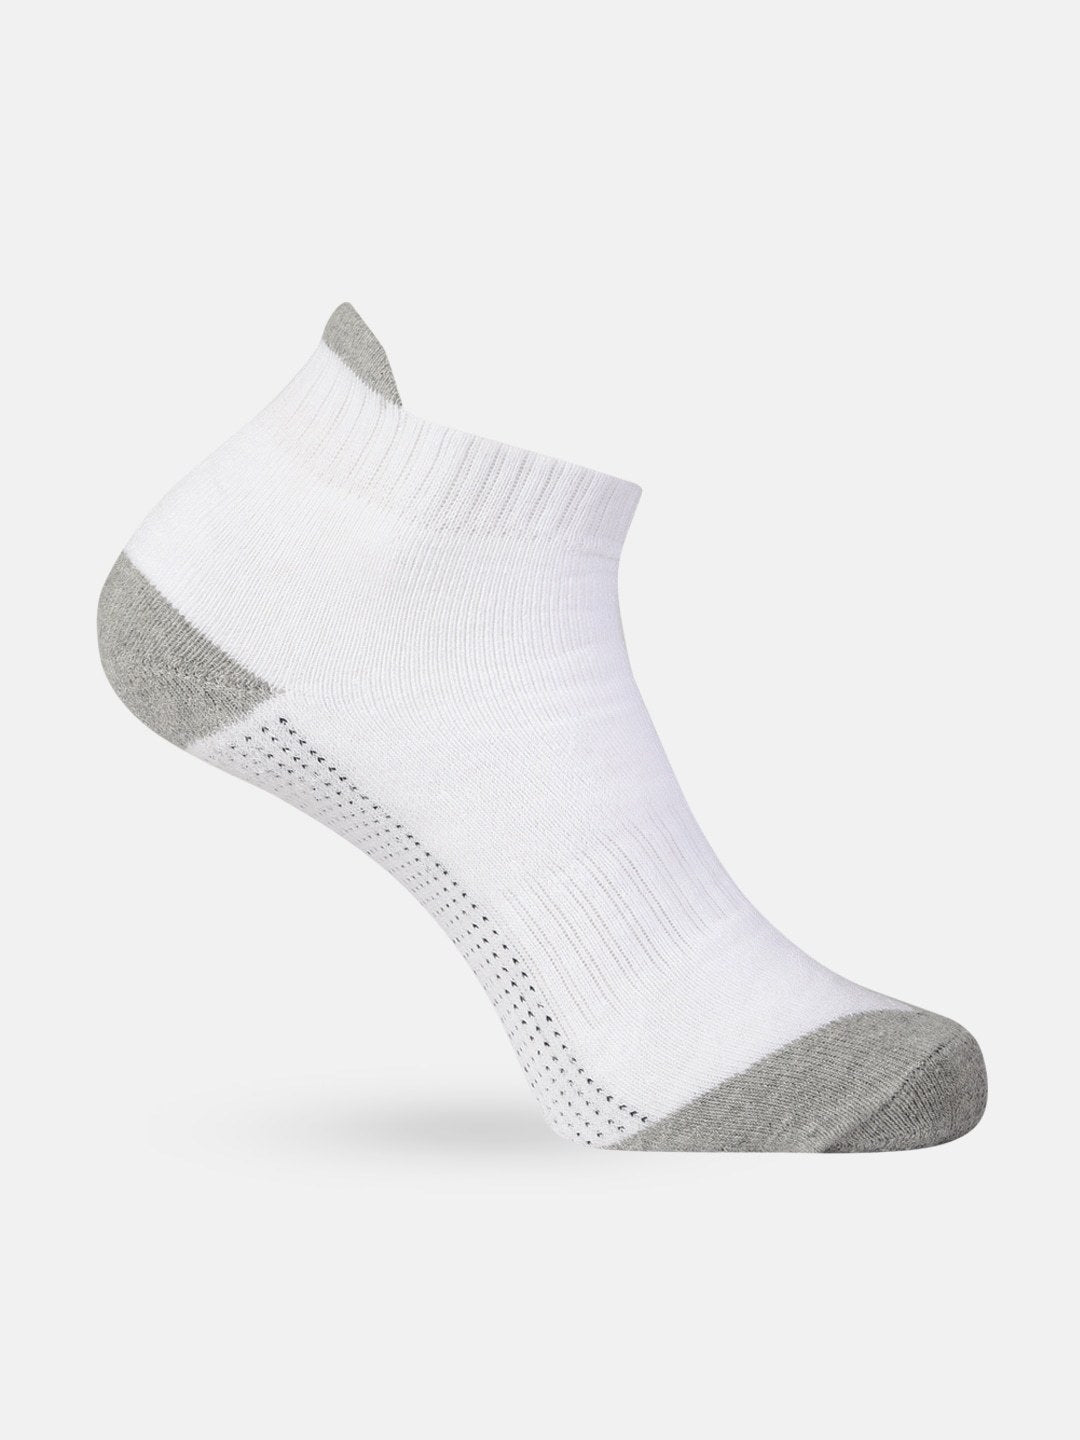 Poomer Sports Ankle Socks - Premium (Set of 3 pairs)